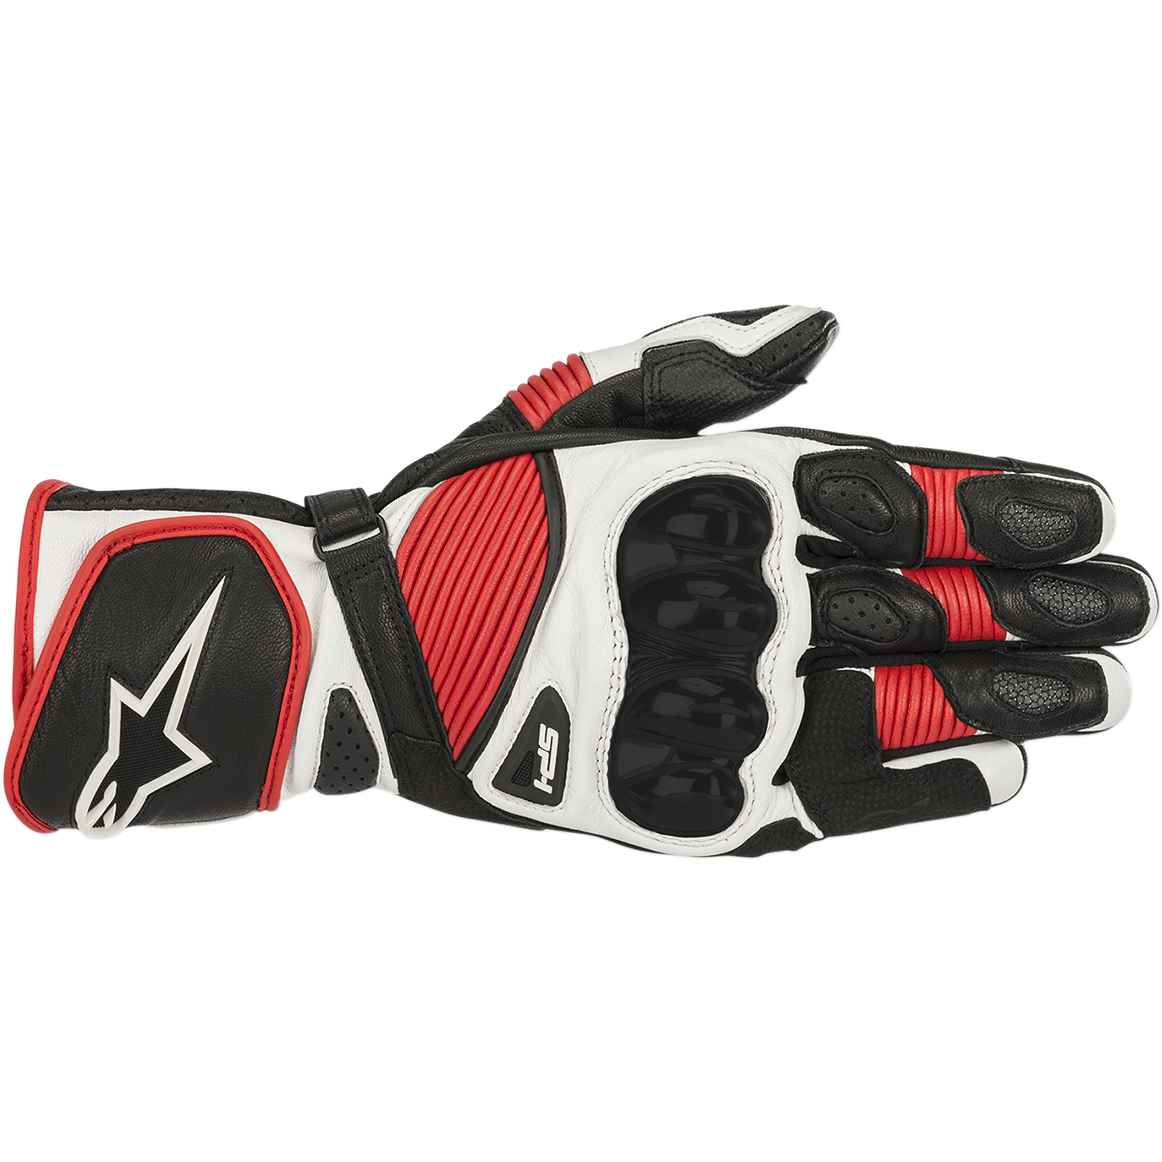 SP-1 Gloves